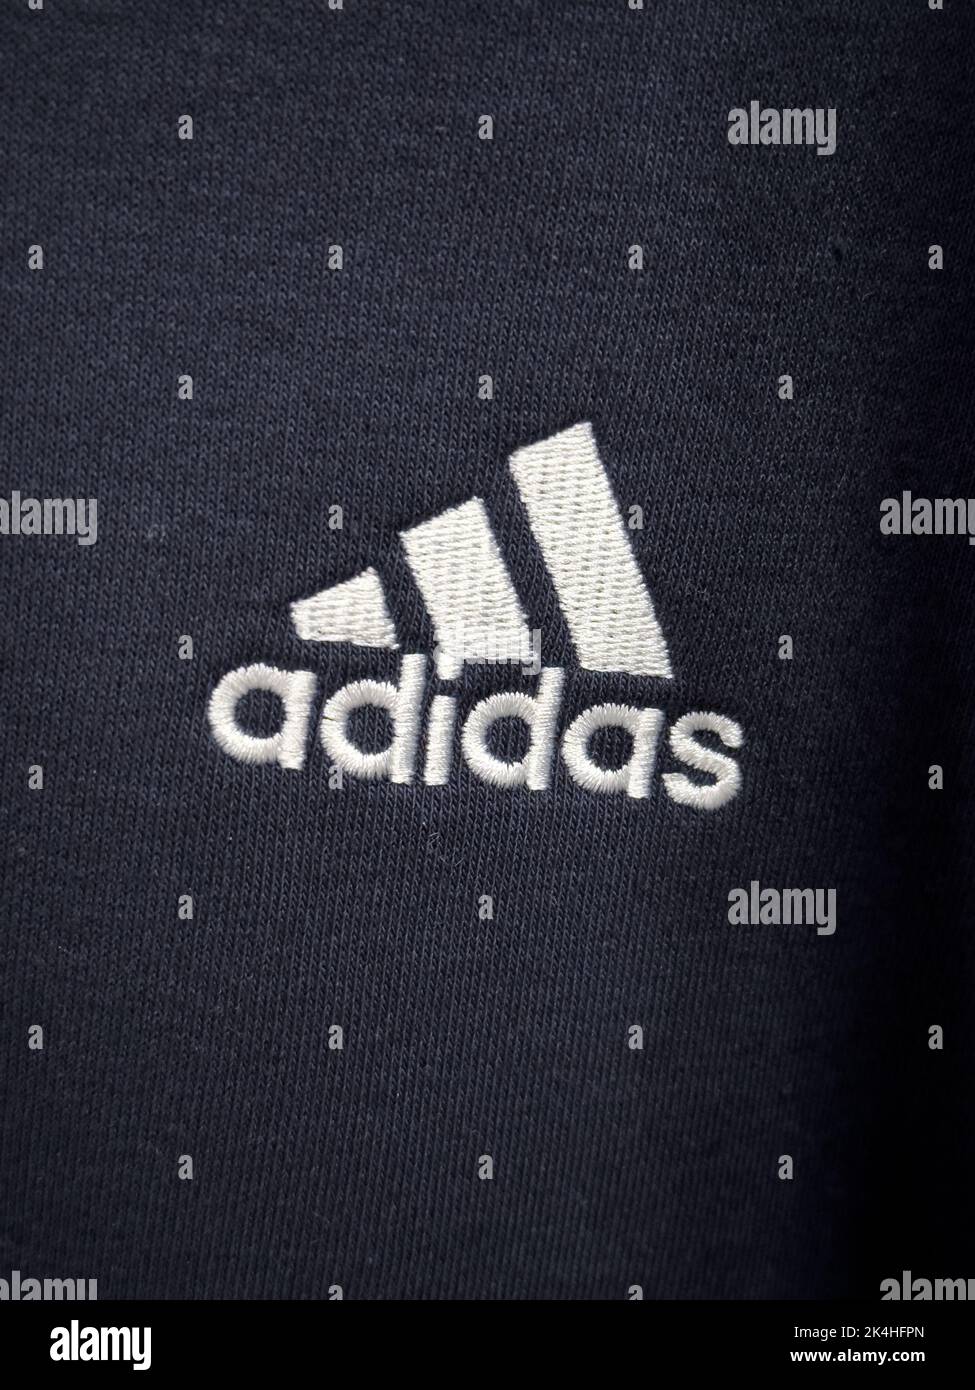 Logo de ropa deportiva fotografías e imágenes de alta resolución - Alamy